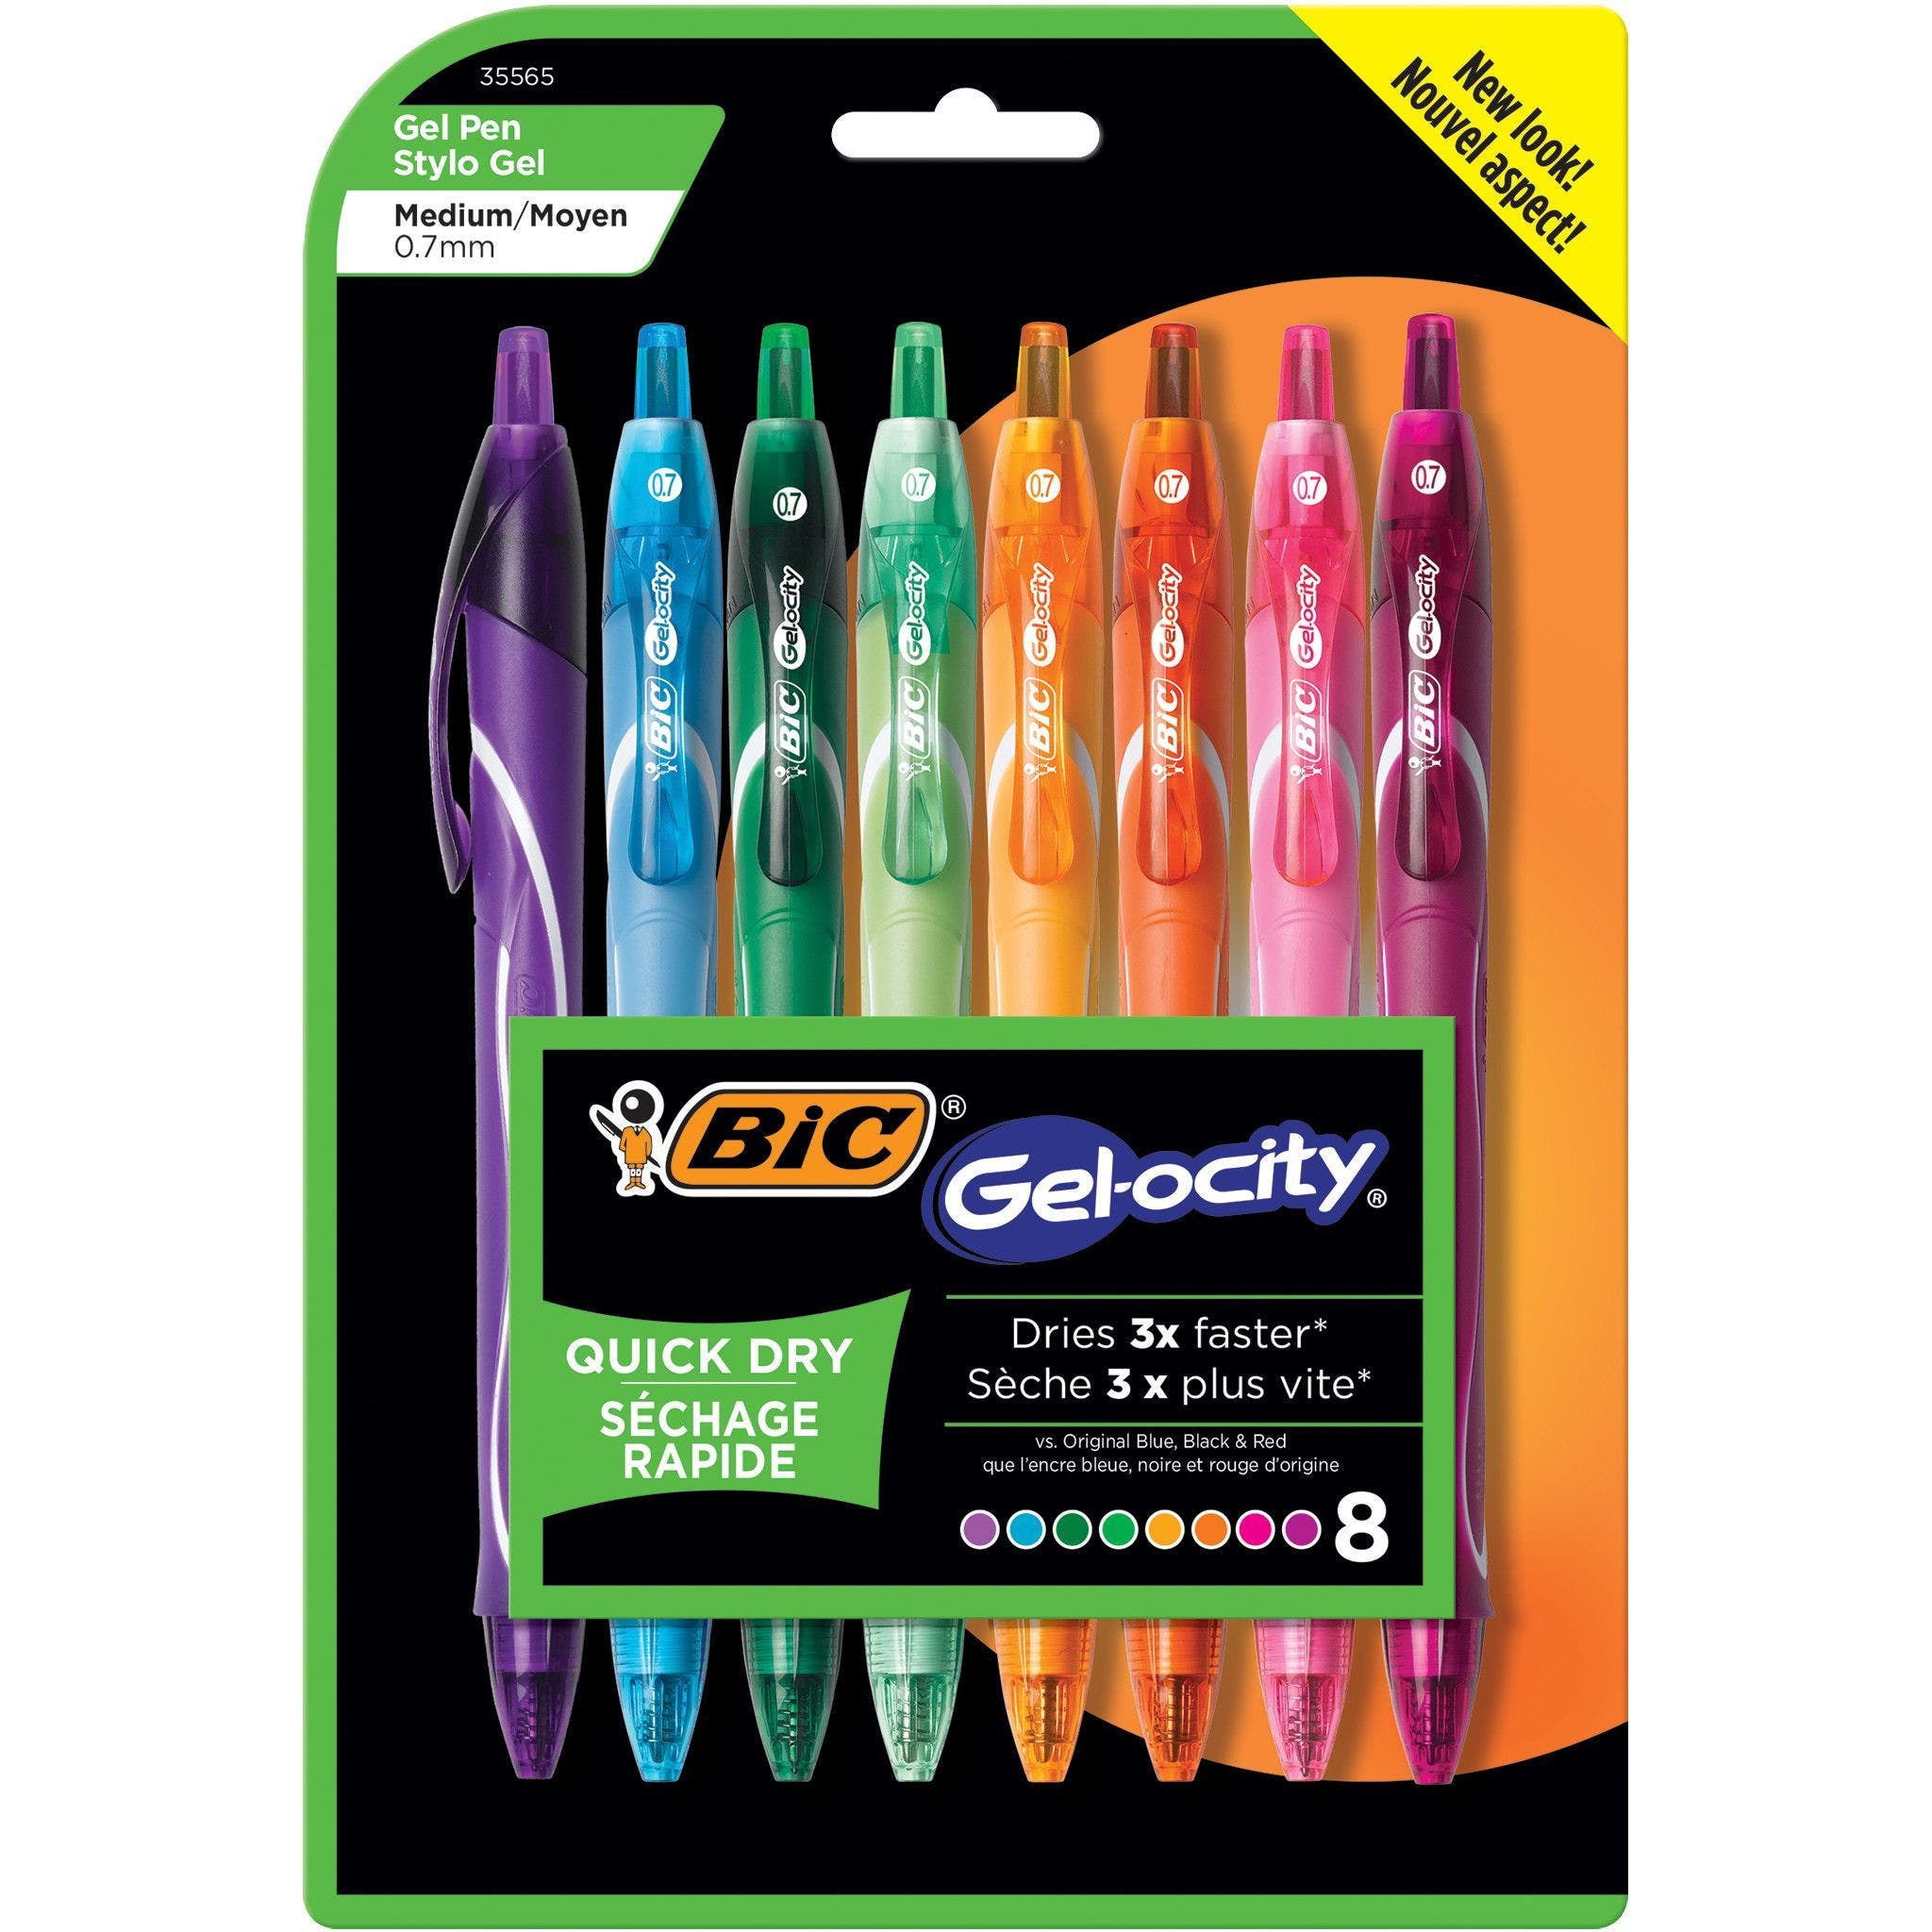 24 Pens Assorted Colors BIC Gel-ocity Original Retractable Gel Spinner 